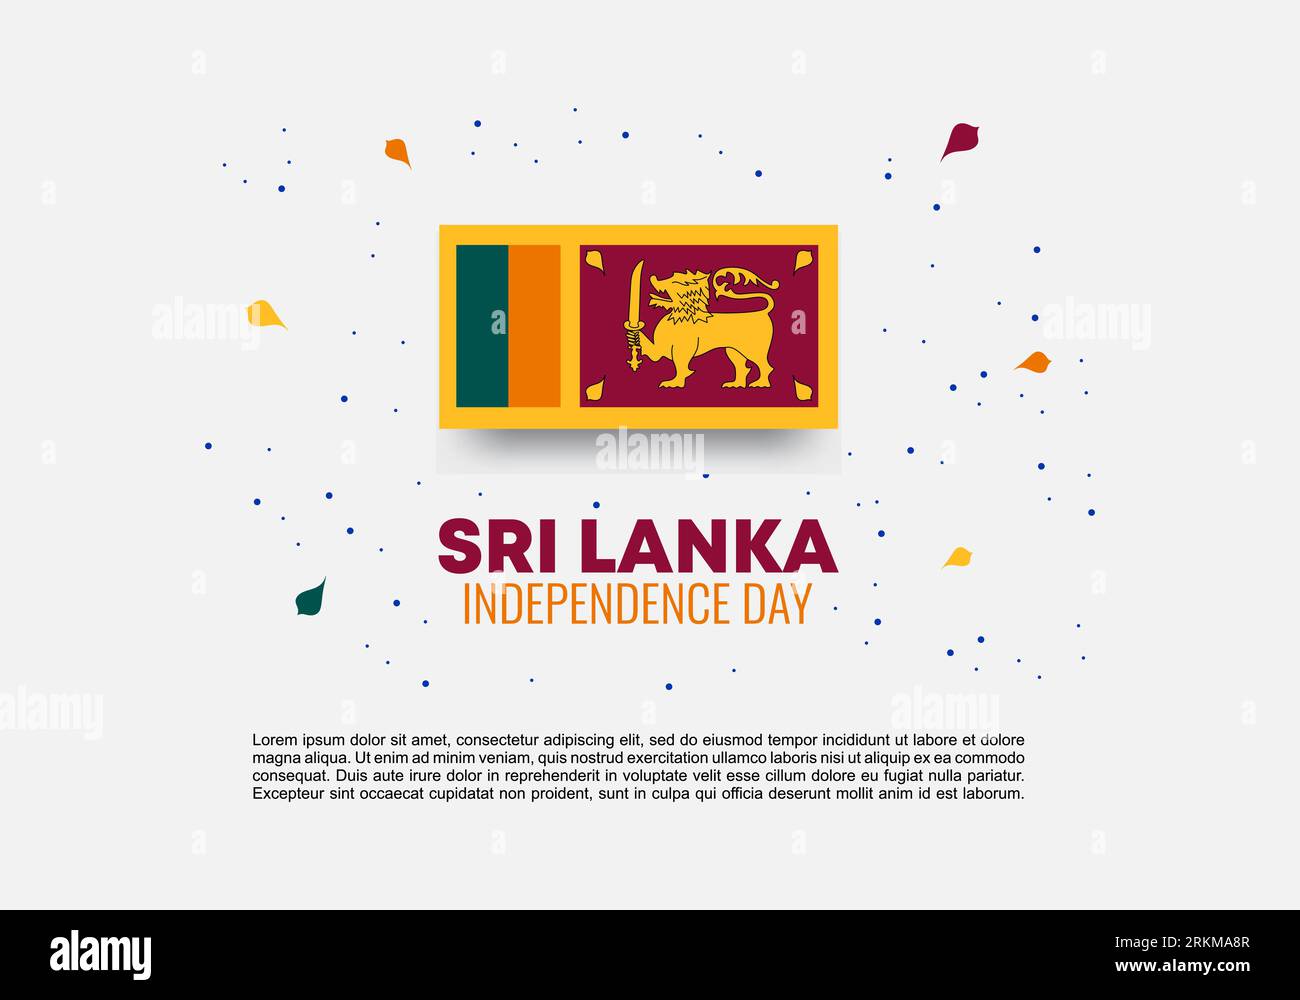 Sri lanka independence day background banner poster for national celebration on February 4 th. Stock Vector